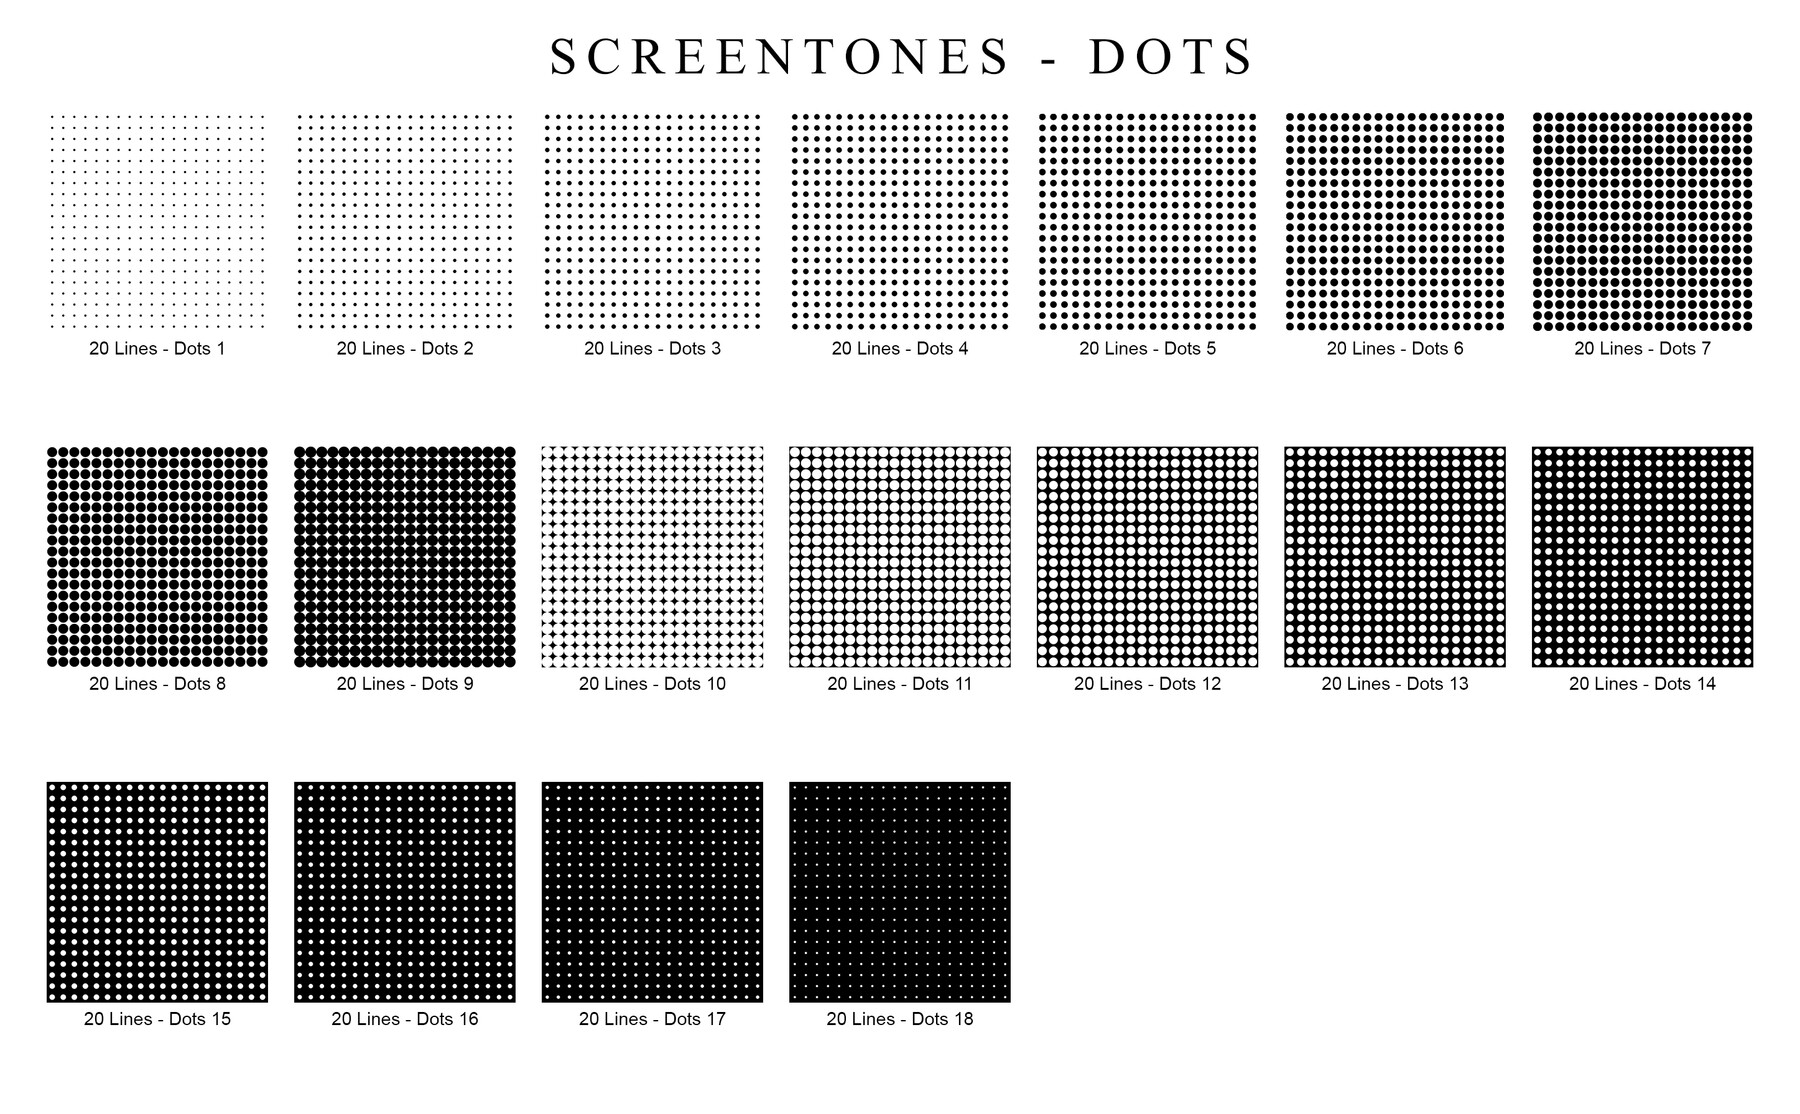 ArtStation - Screentones Collection 2 - Dots | Artworks